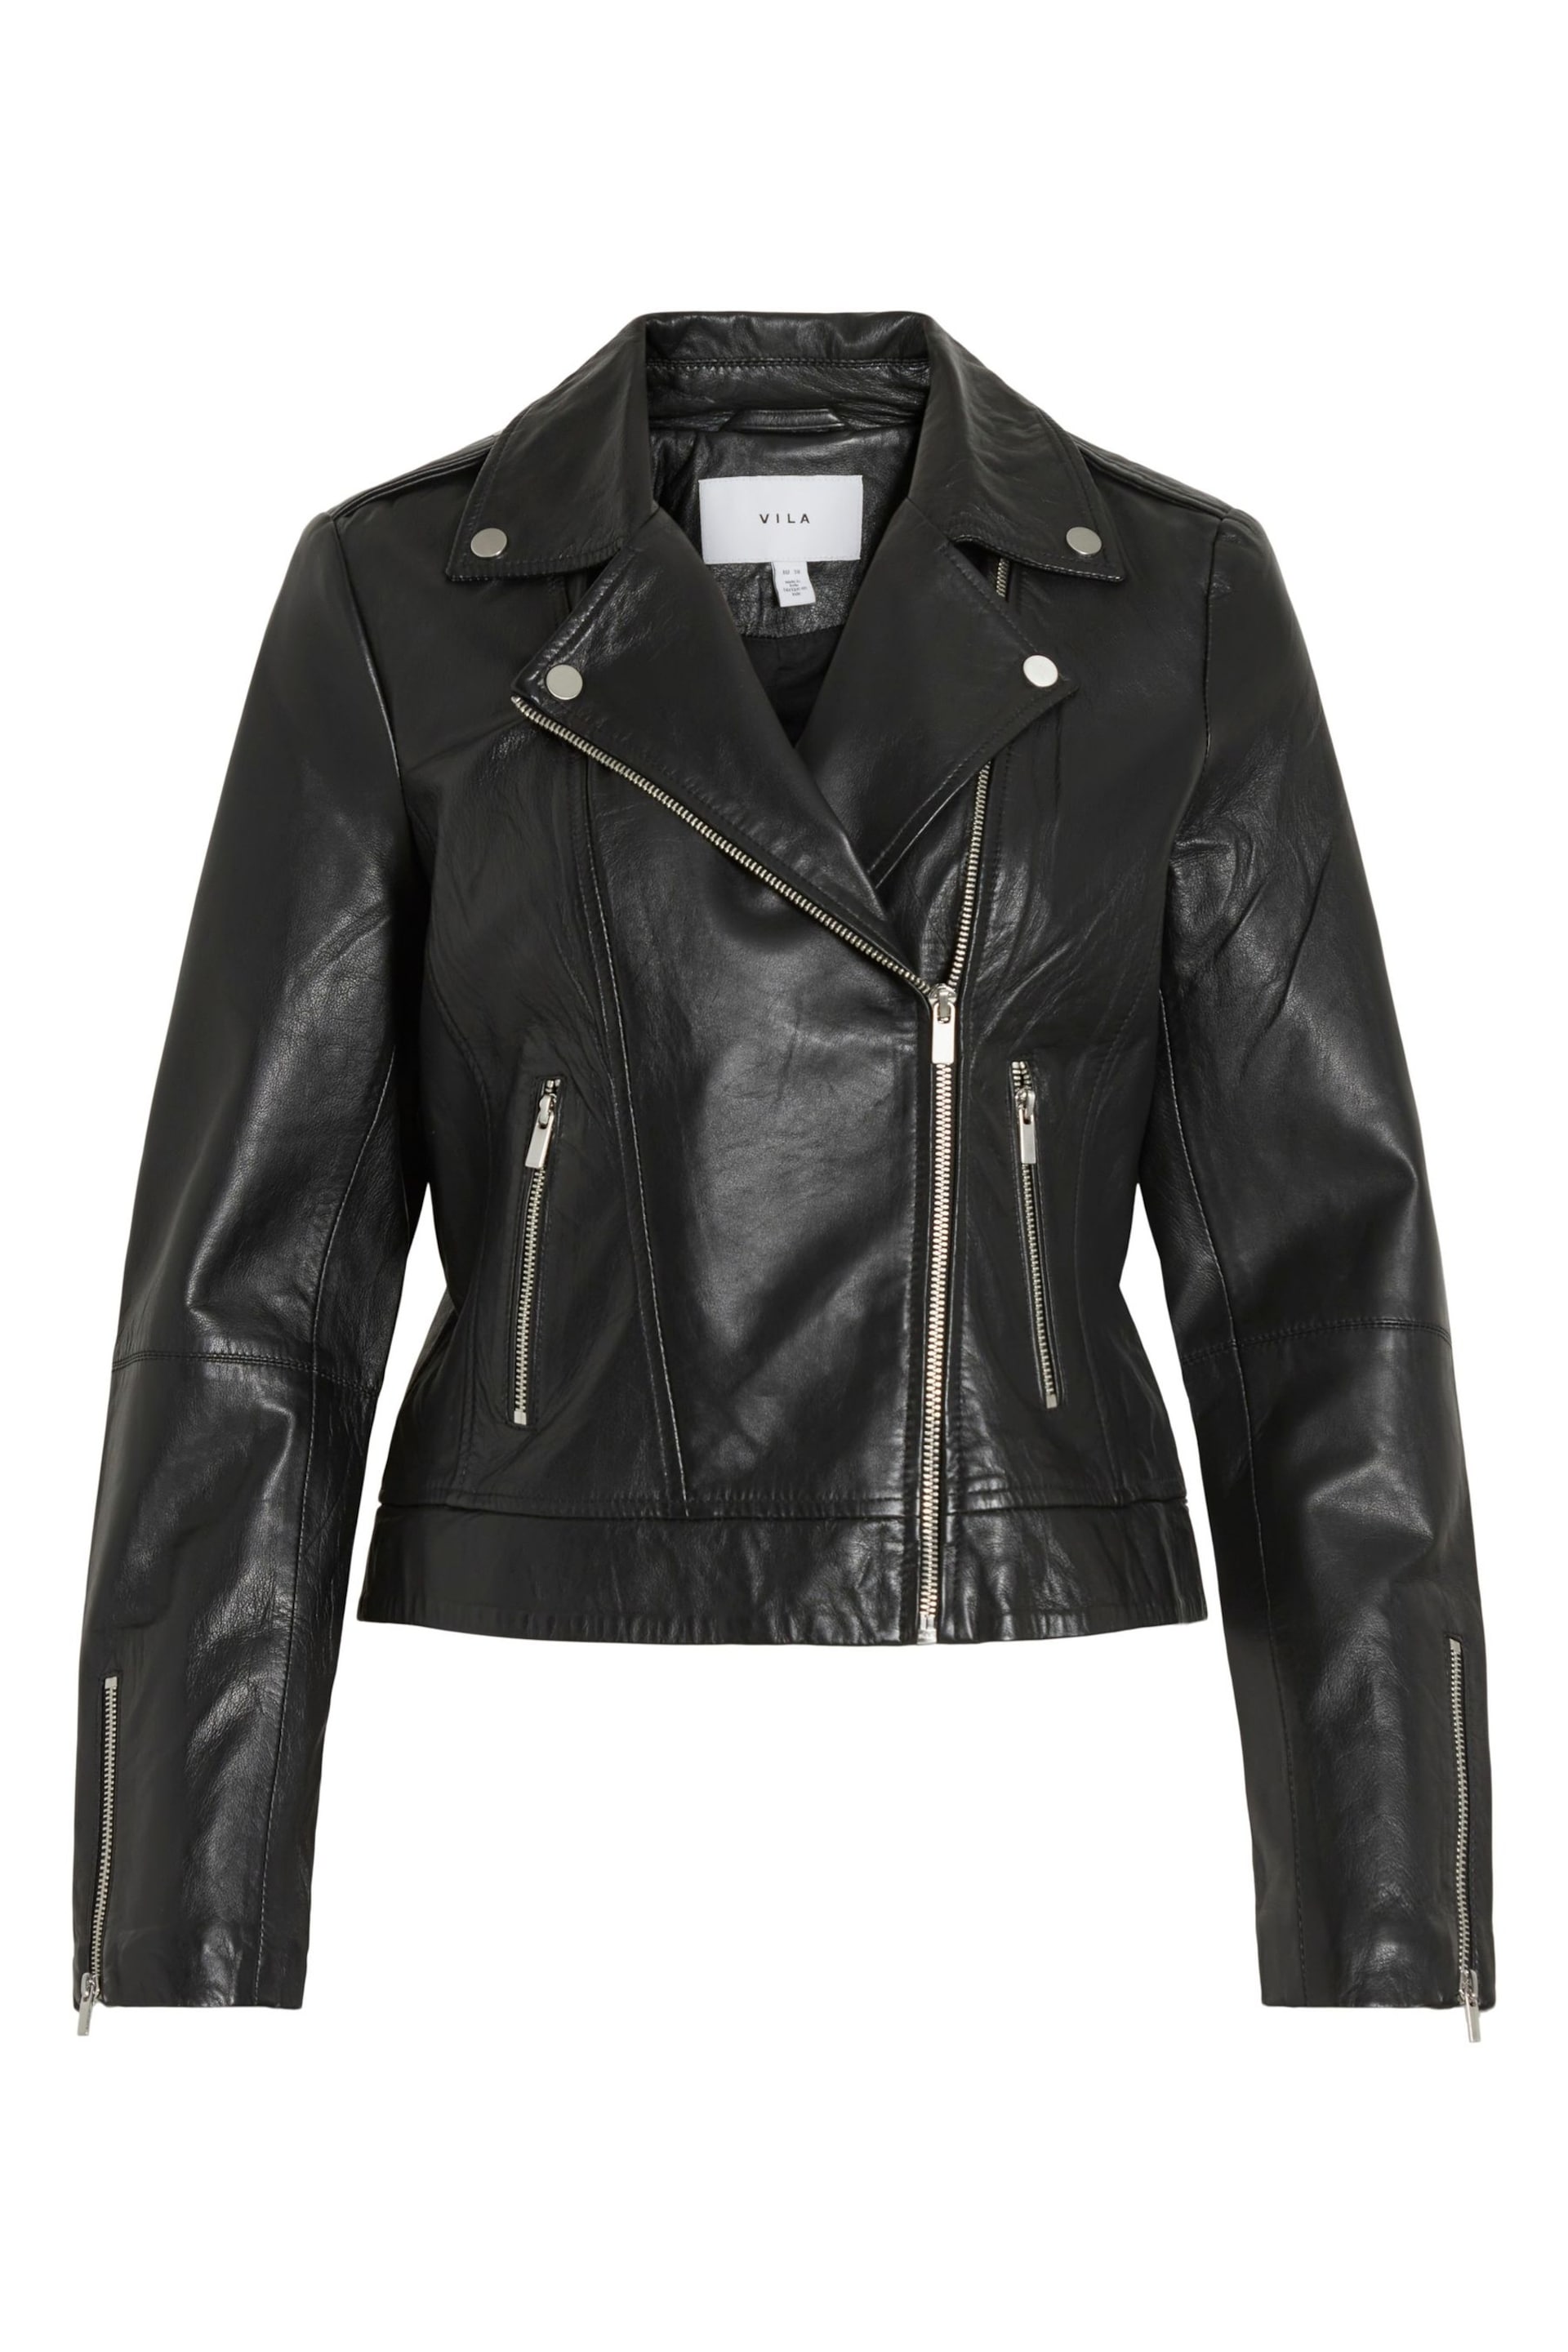 VILA Black Faux Leather Jacket - Image 6 of 7